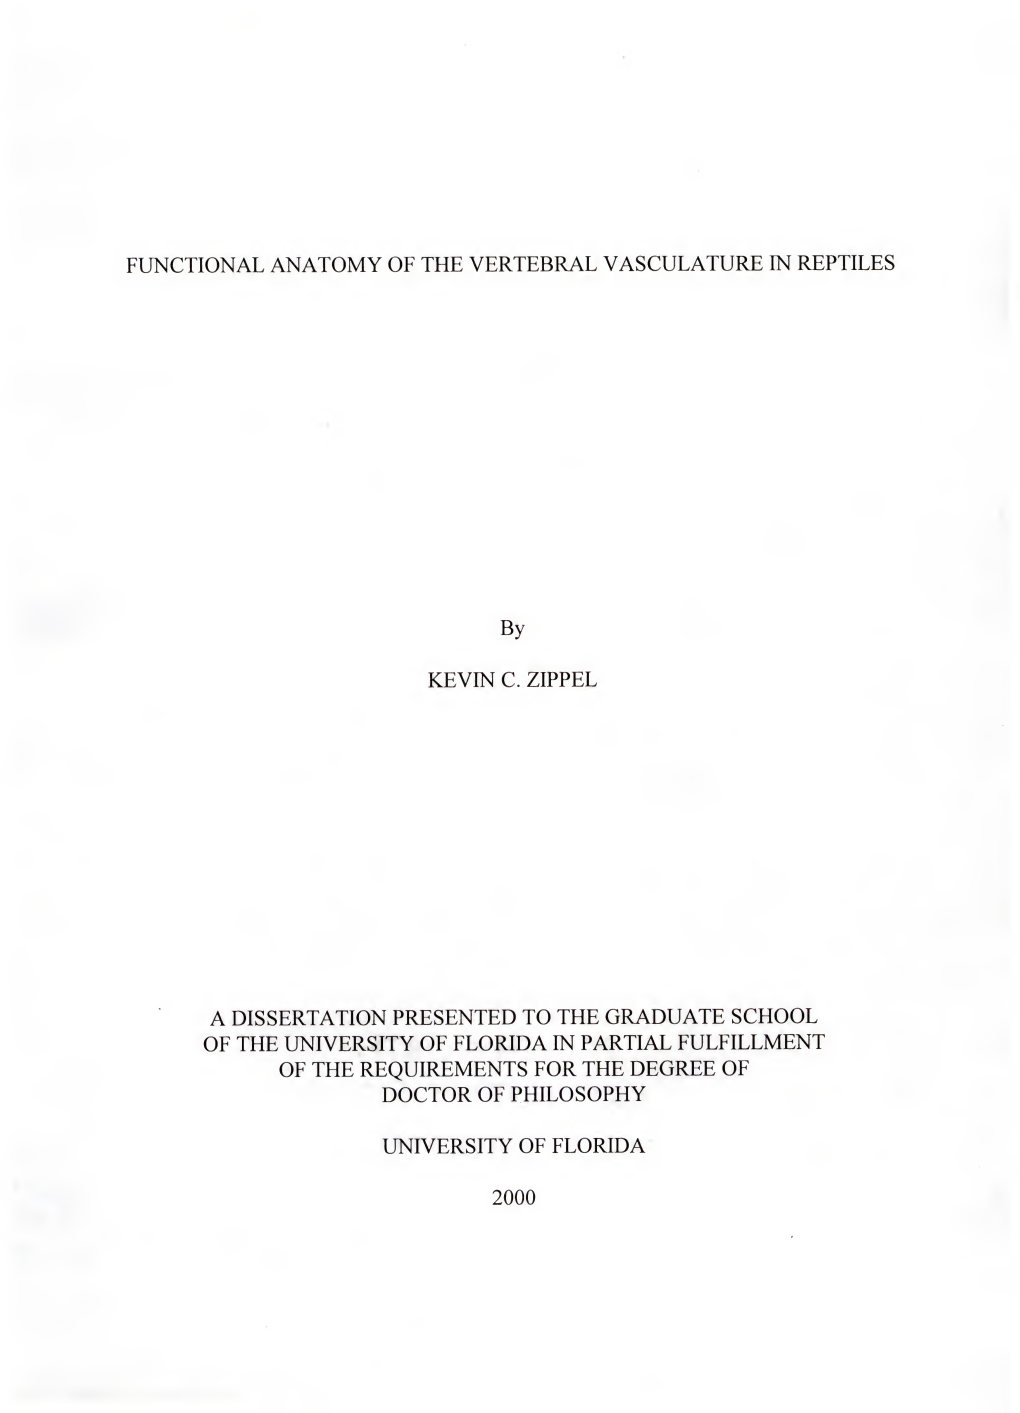 Functional Anatomy of the Vertebral Vasculature in Reptiles